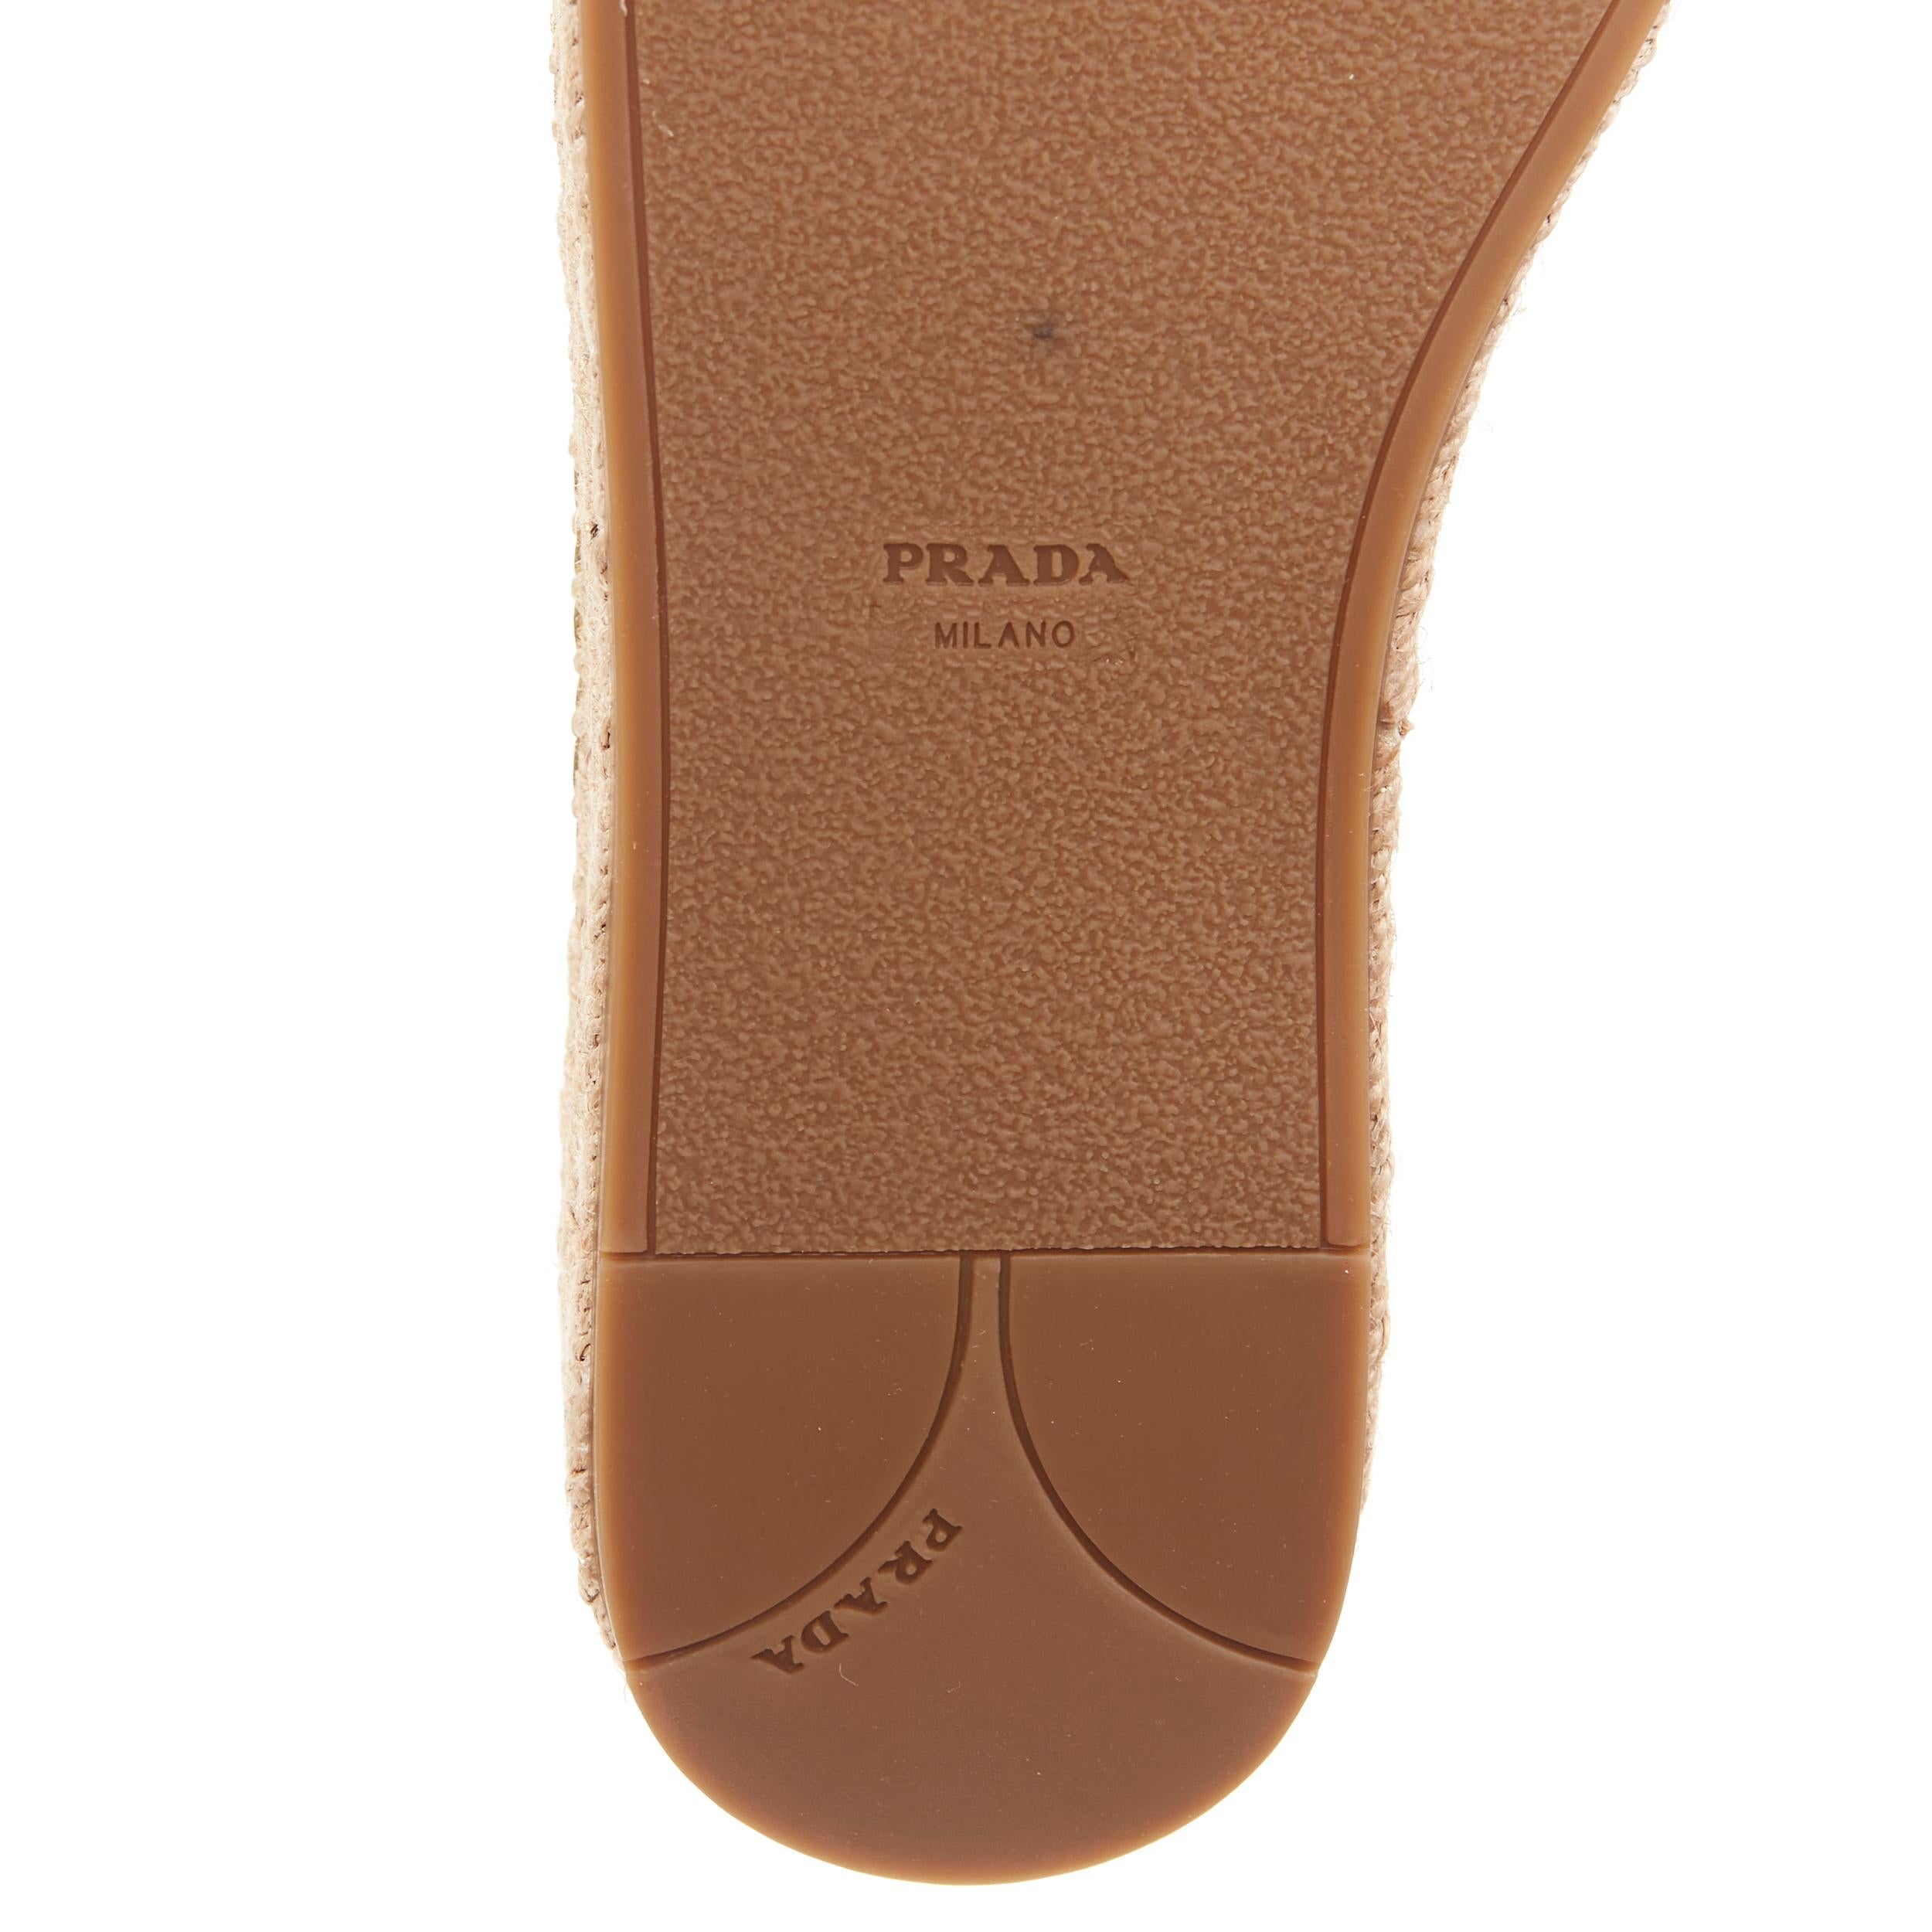 new PRADA gold leather logo peep toe jute platform espadrille shoe EU38.5 4